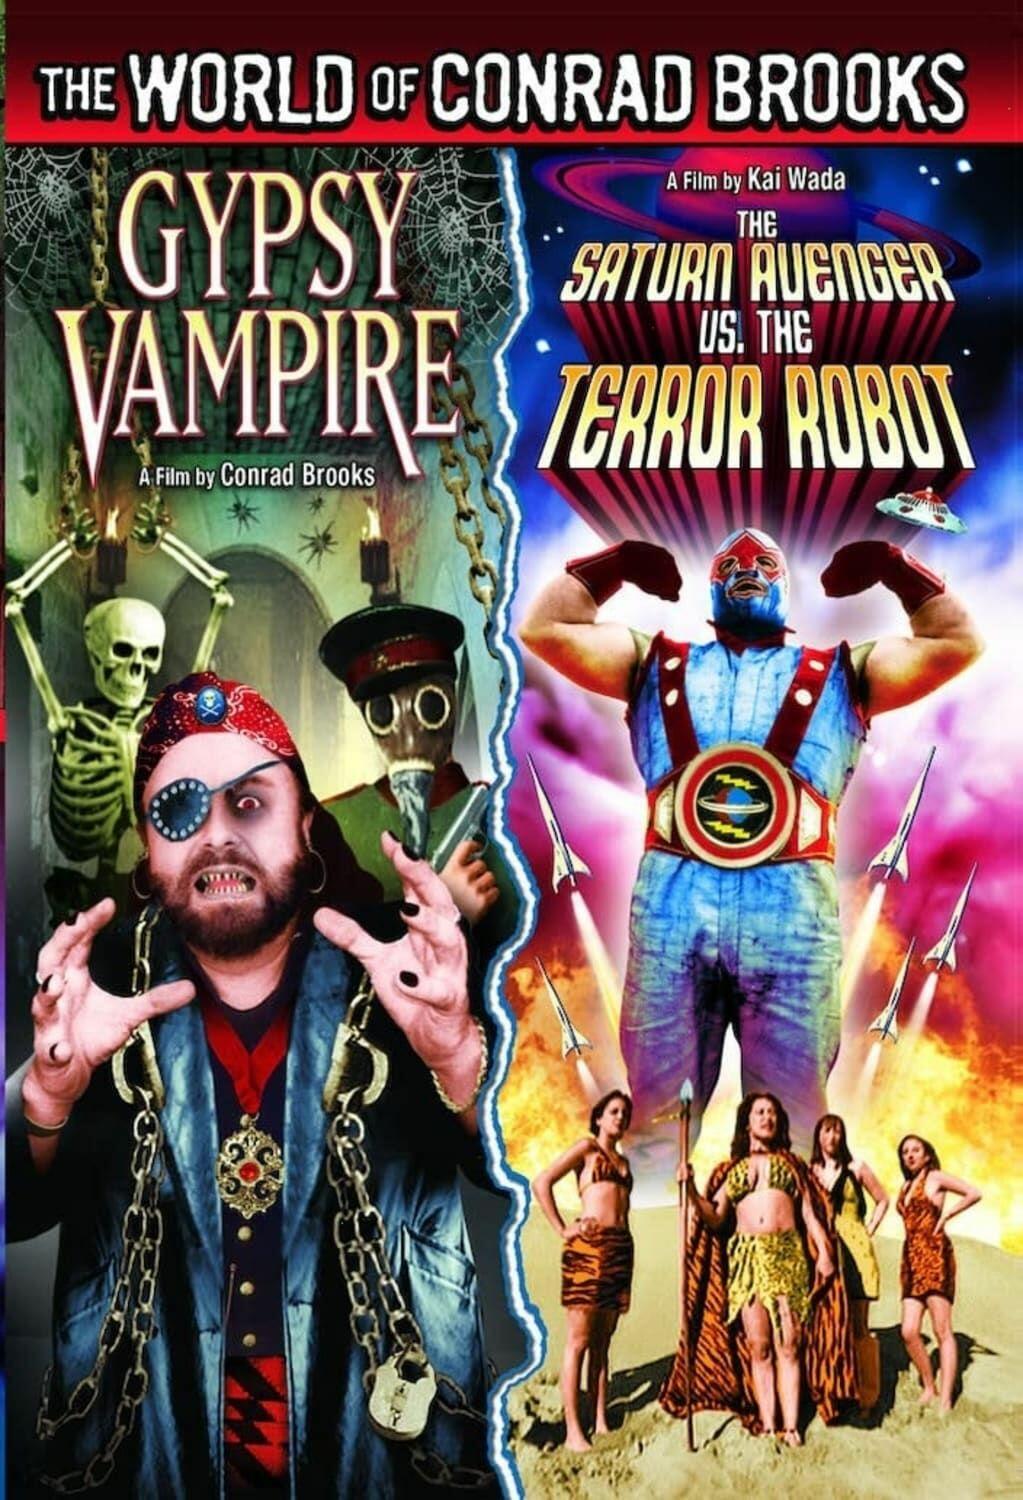 Gypsy Vampire (2005) / Saturn Avenger Vs. The Terror Robot (1996)